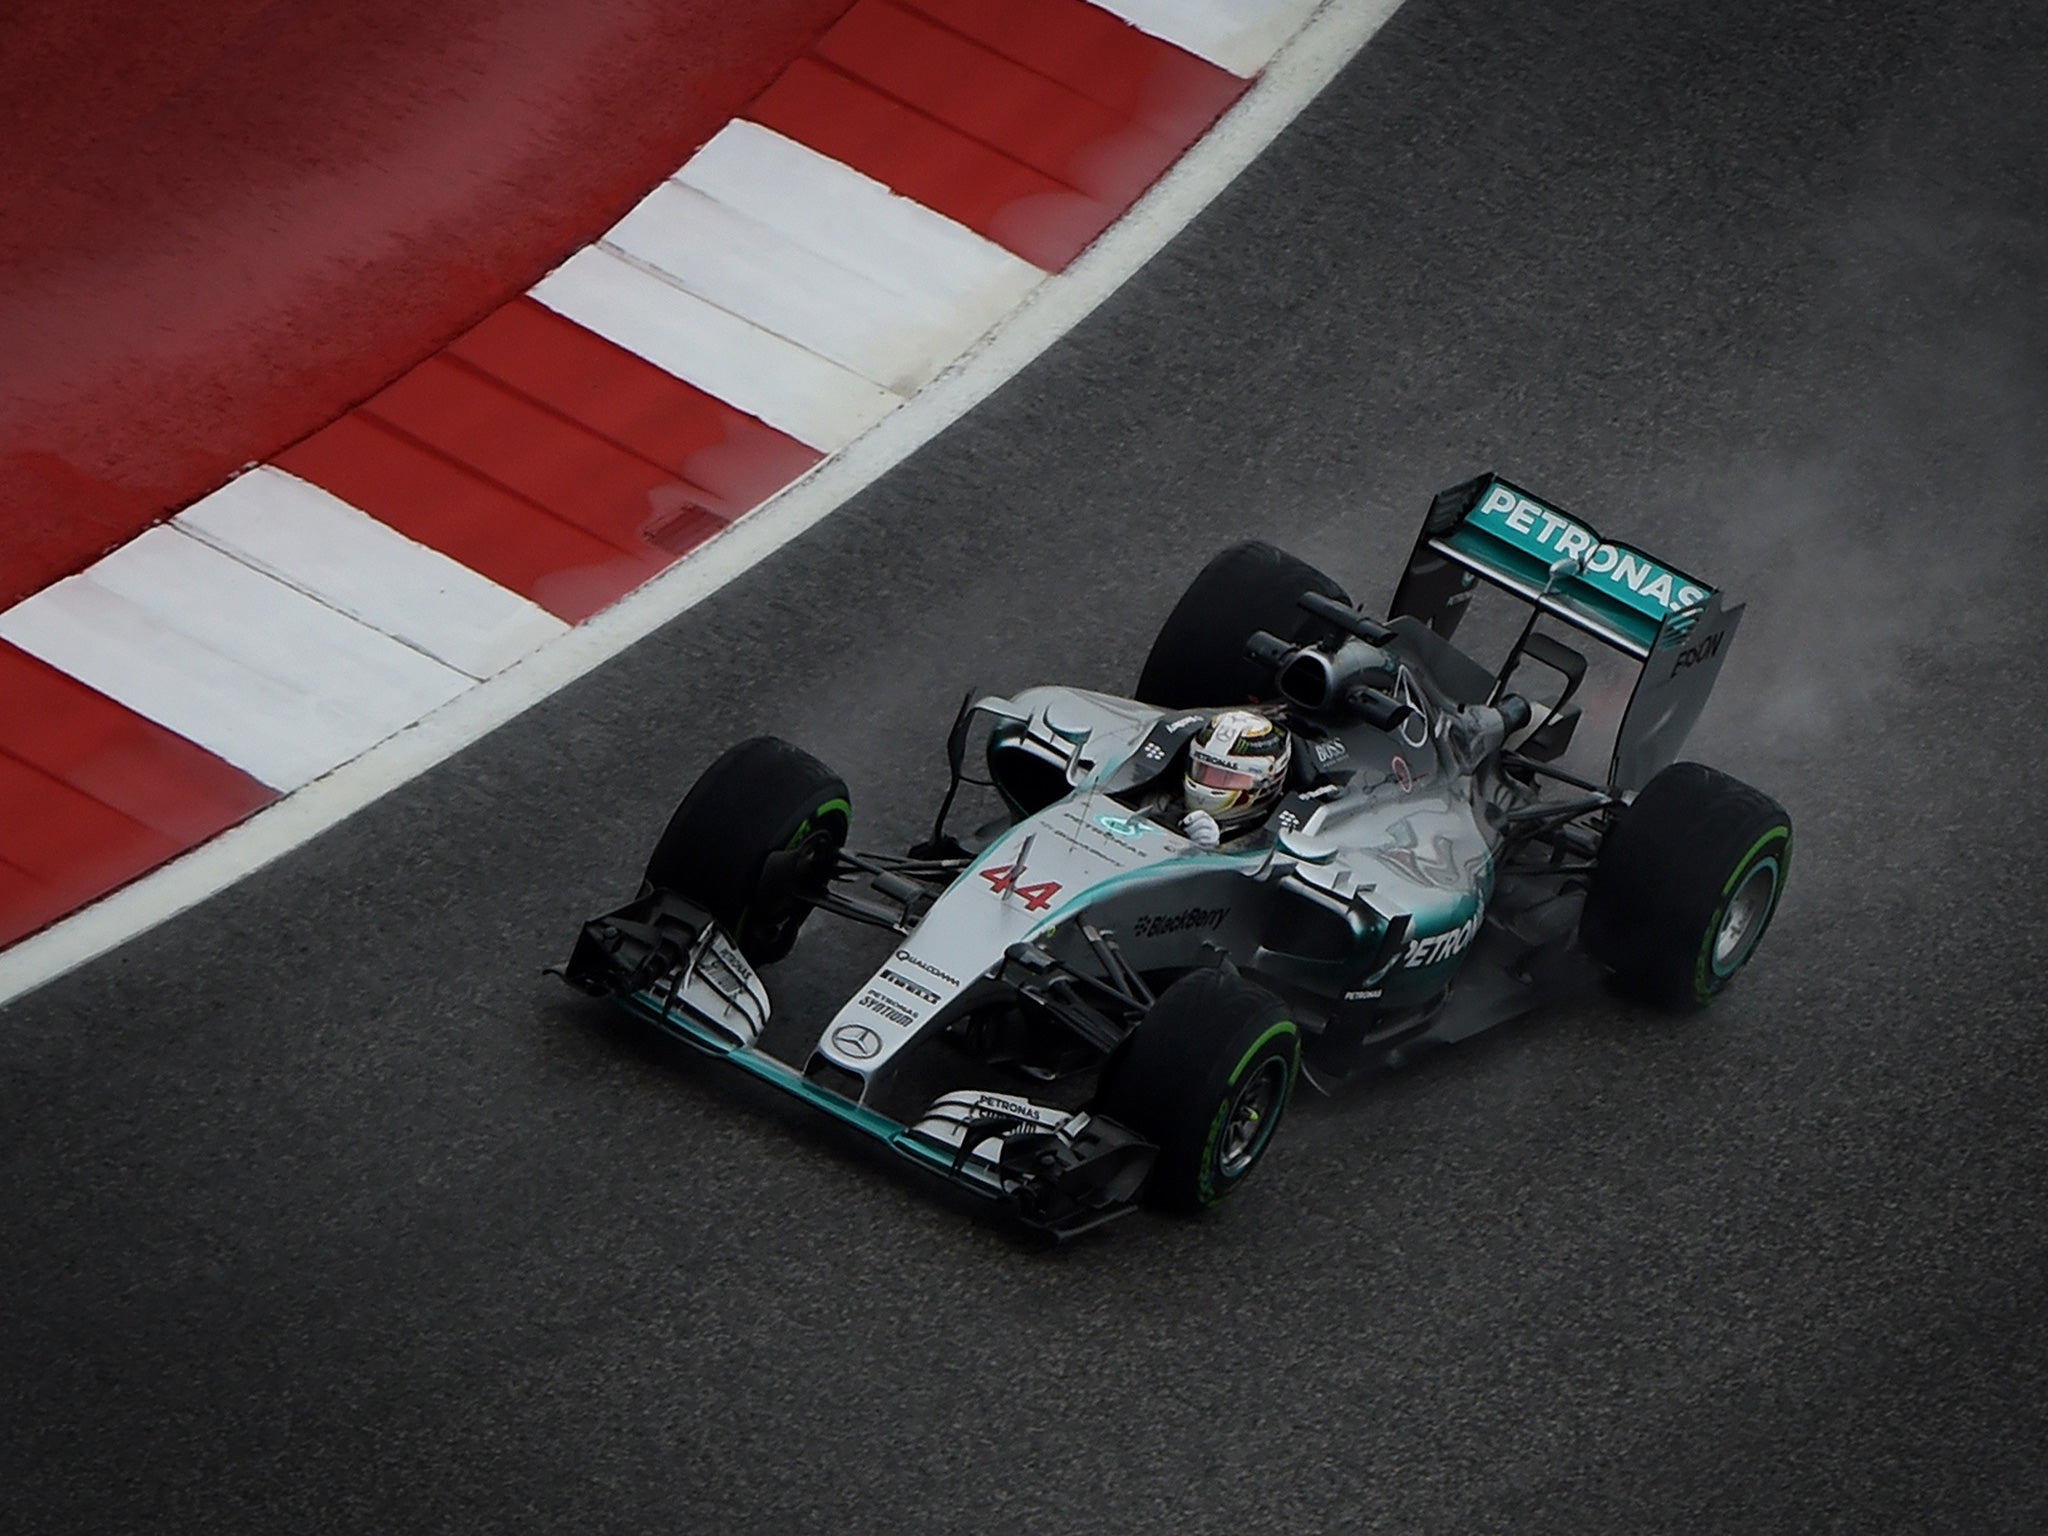 Lewis Hamilton in practice at the United States Grand Prix in Austin